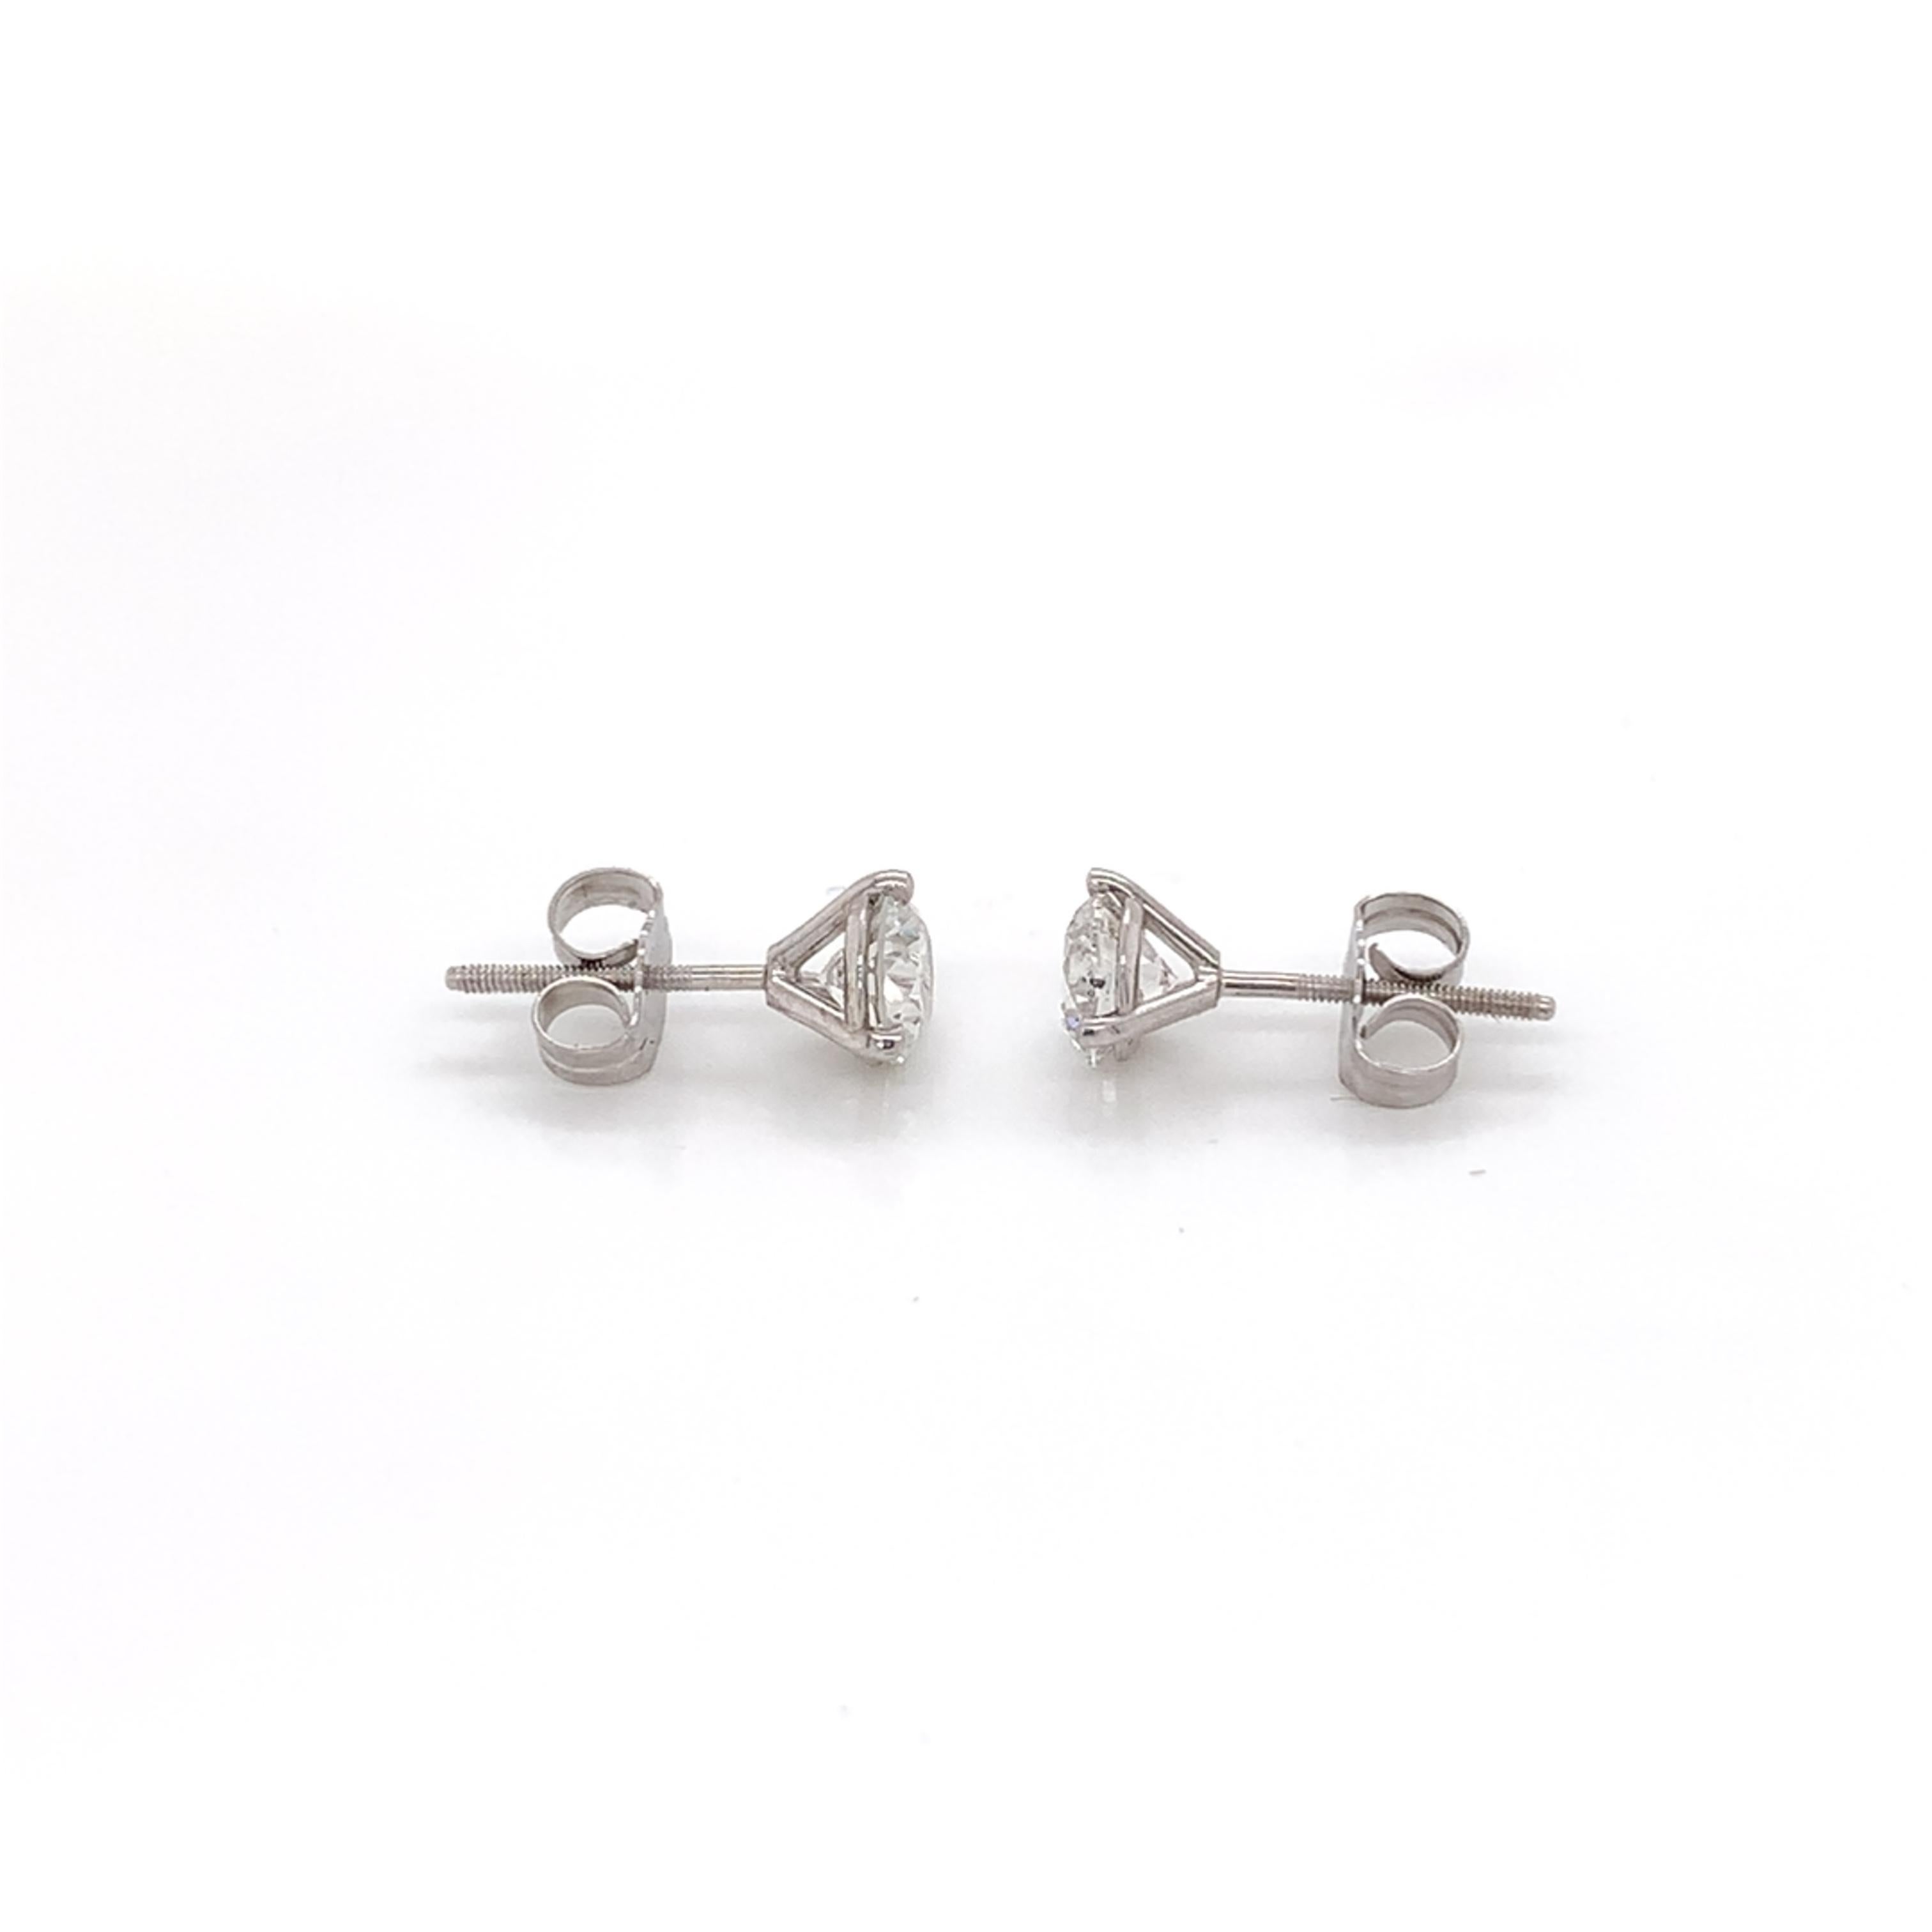 Brilliant Cut 1.05 Carat Diamond Stud Earrings